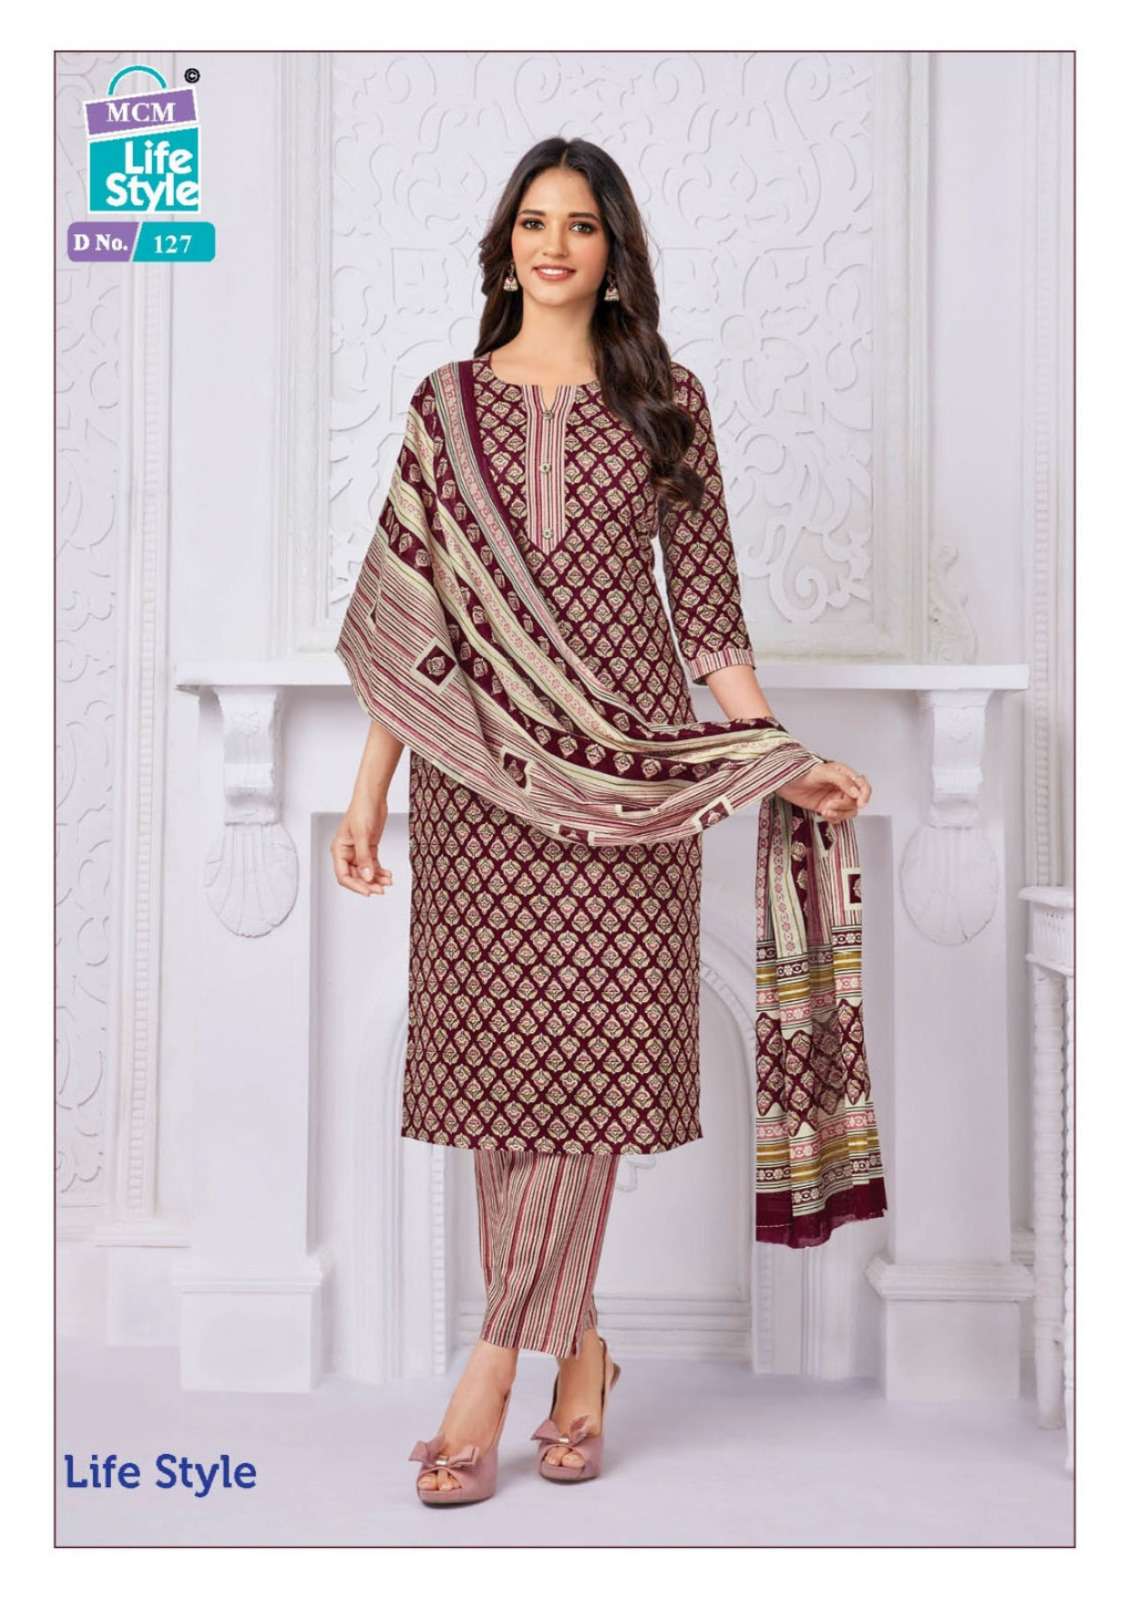 mcm lifestyle life style vol-2 126-137 series readymade designer salwar suits wholeasle price surat 